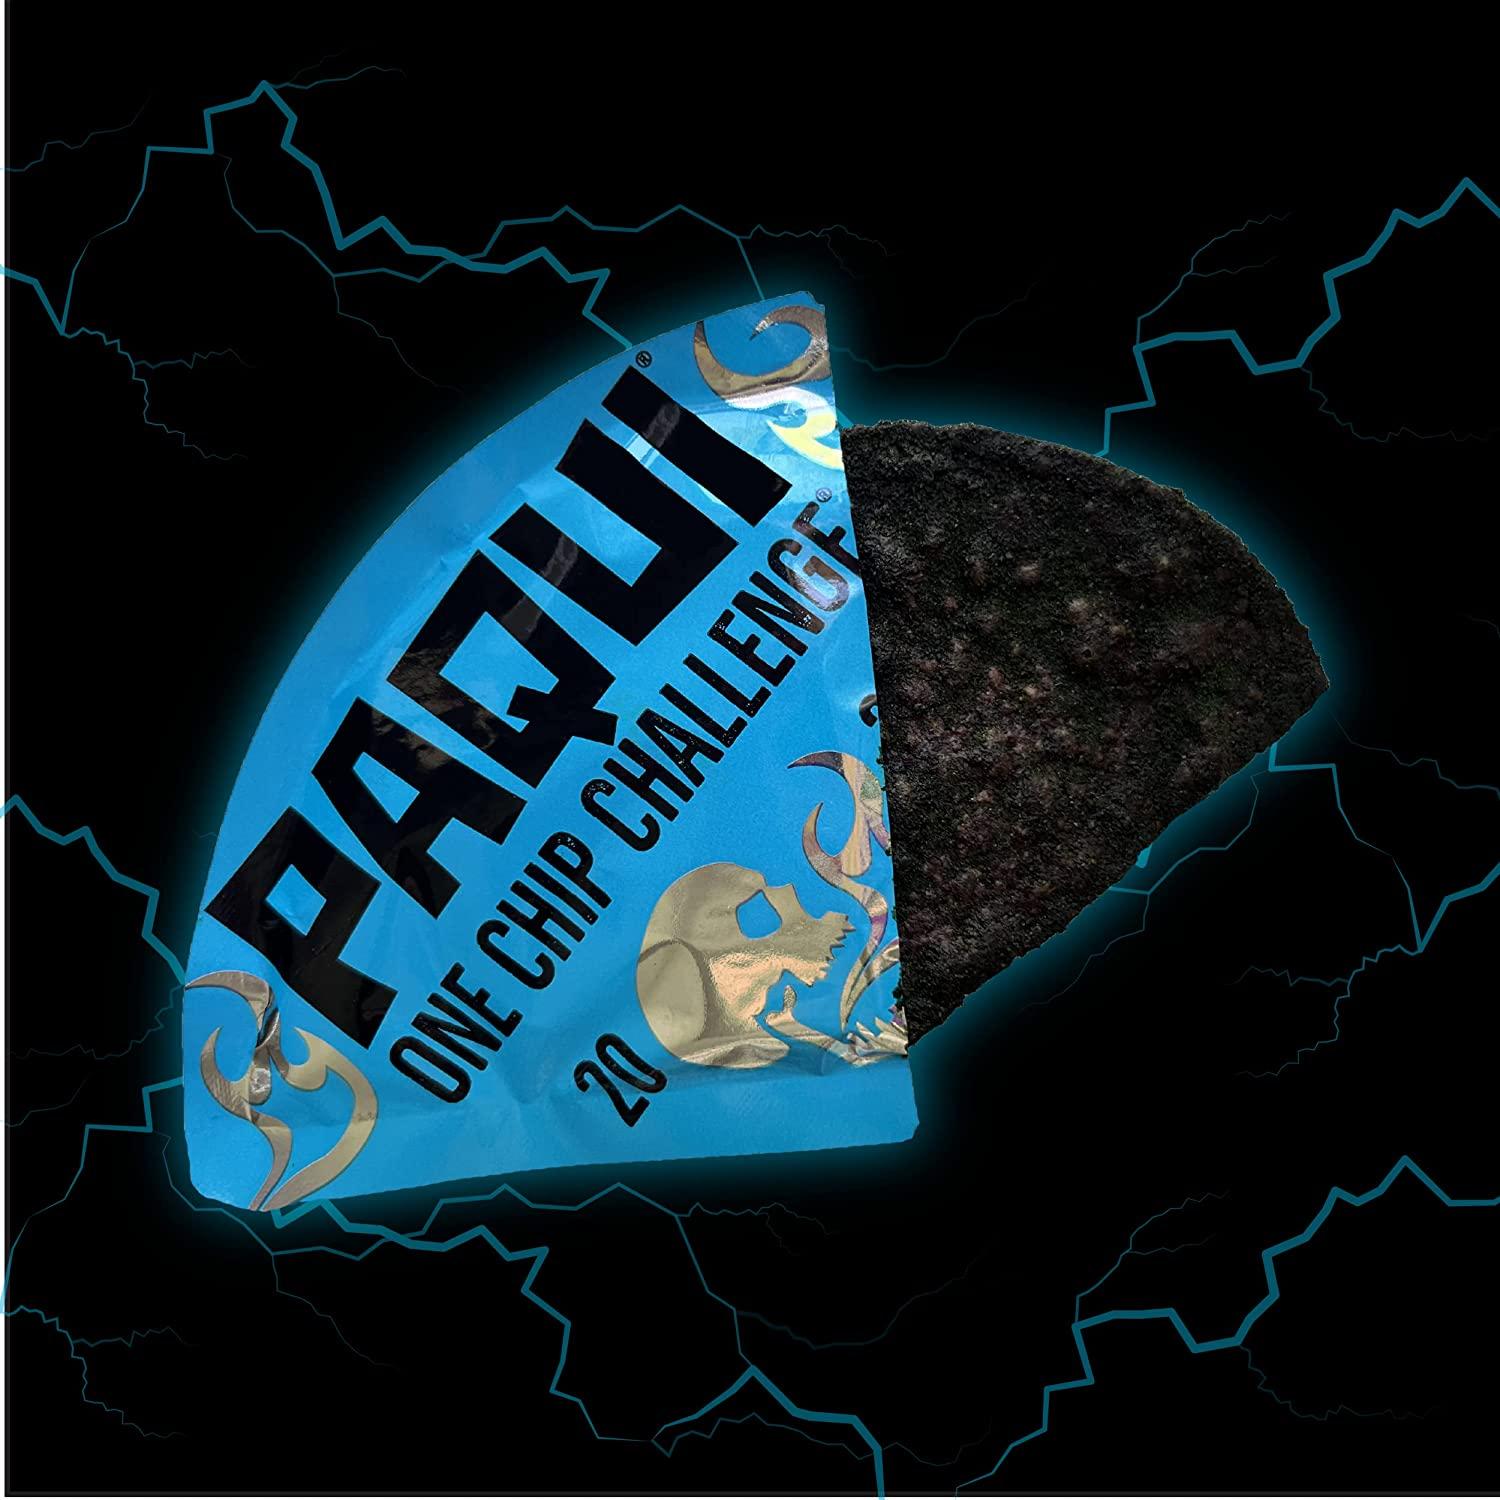 Paqui ONE CHIP CHALLENGE – 2022 Edition